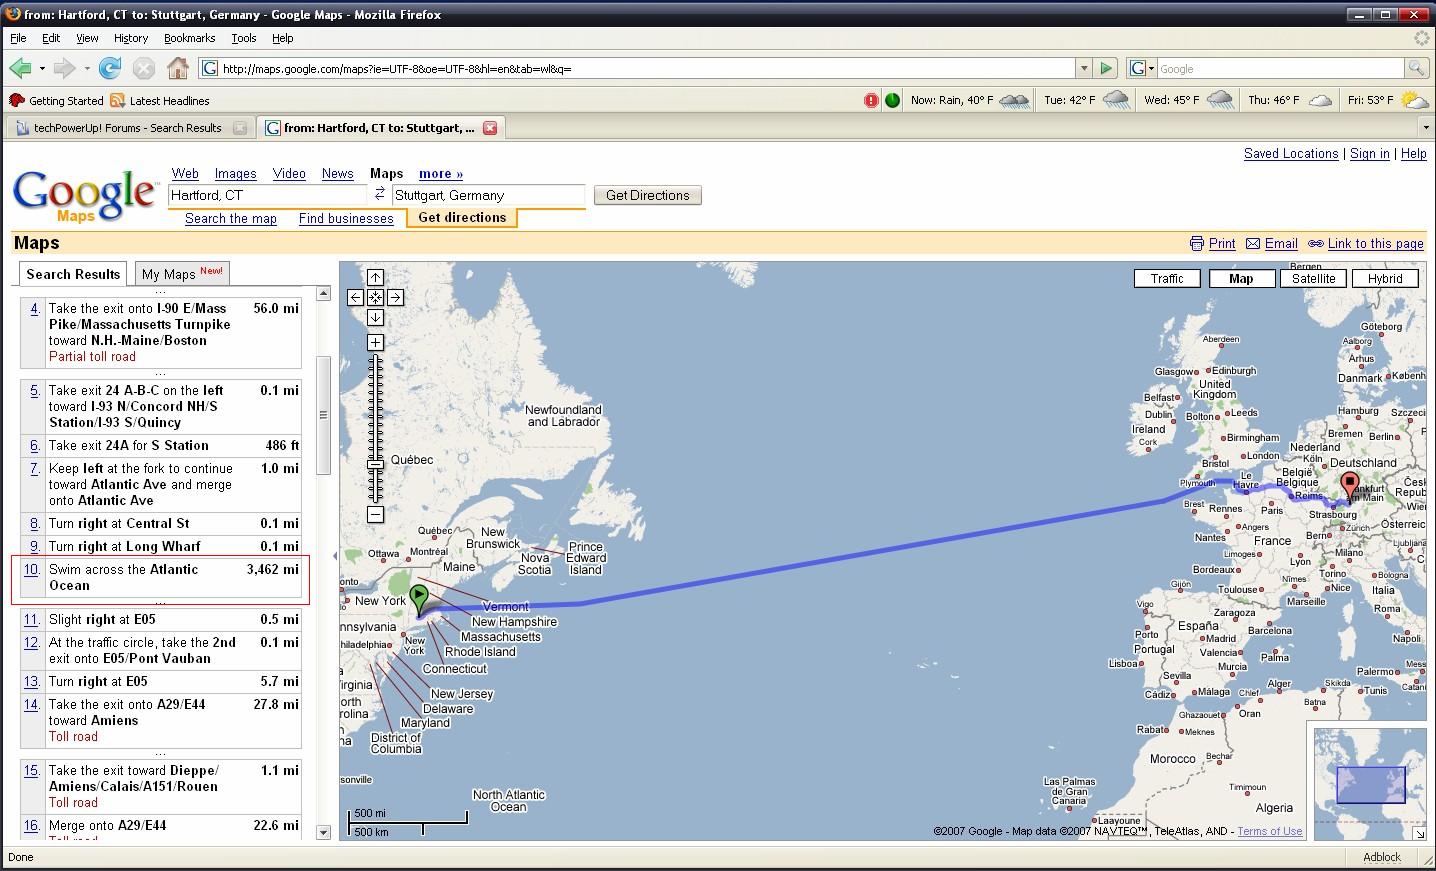 Google Maps Tells its users to 'Swim across the Atlantic Ocean' |  TechPowerUp